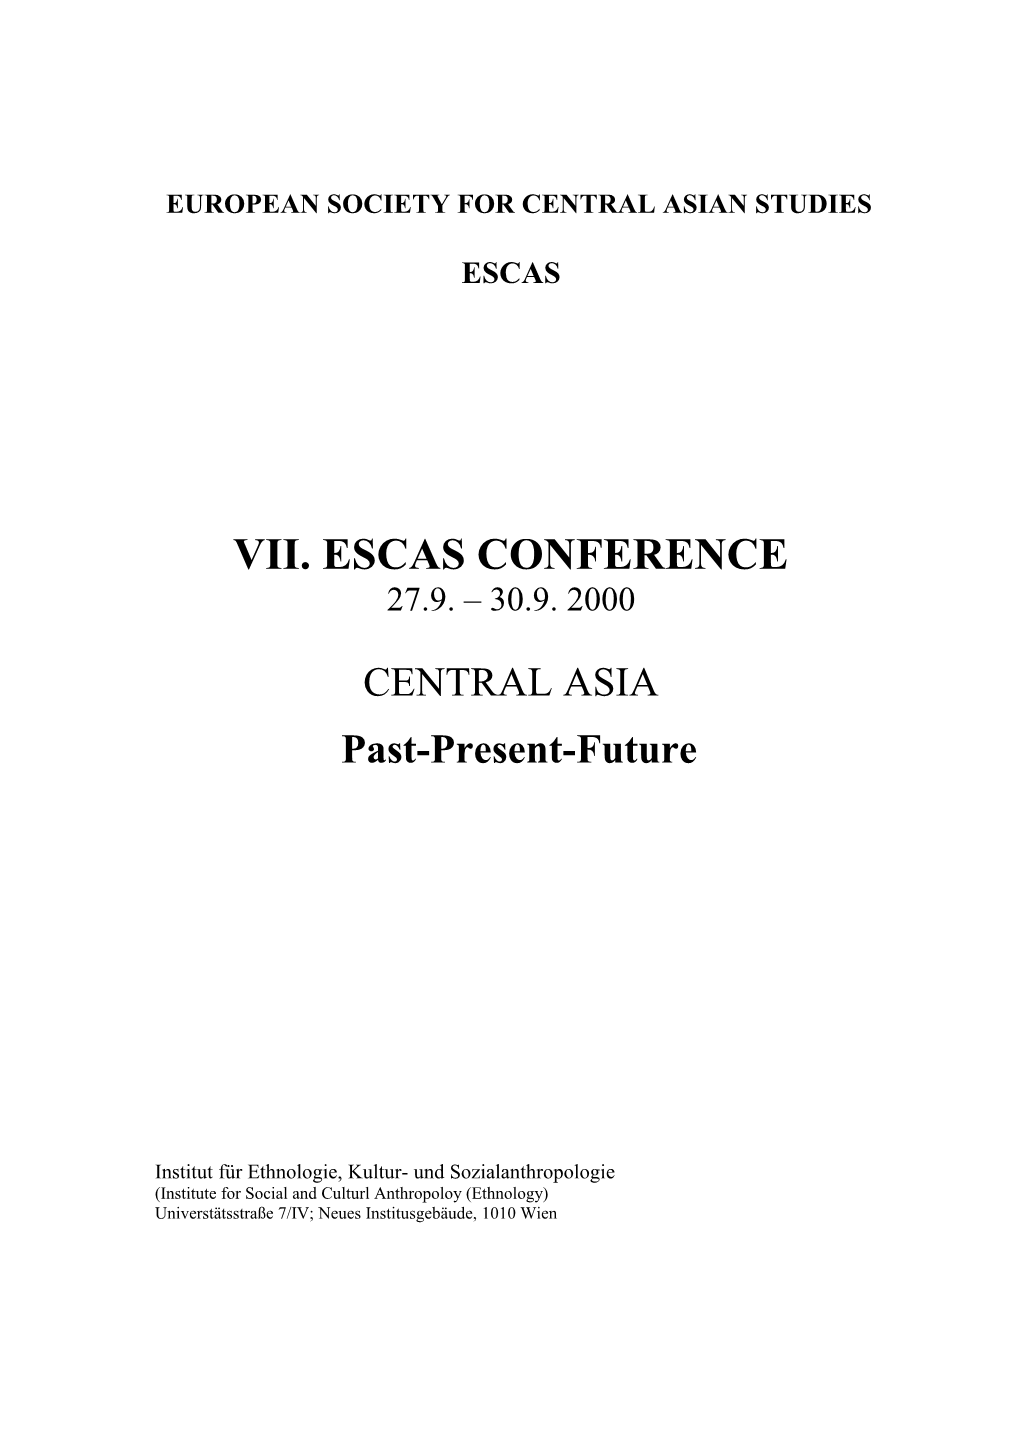 European Society for Central Asian Studies